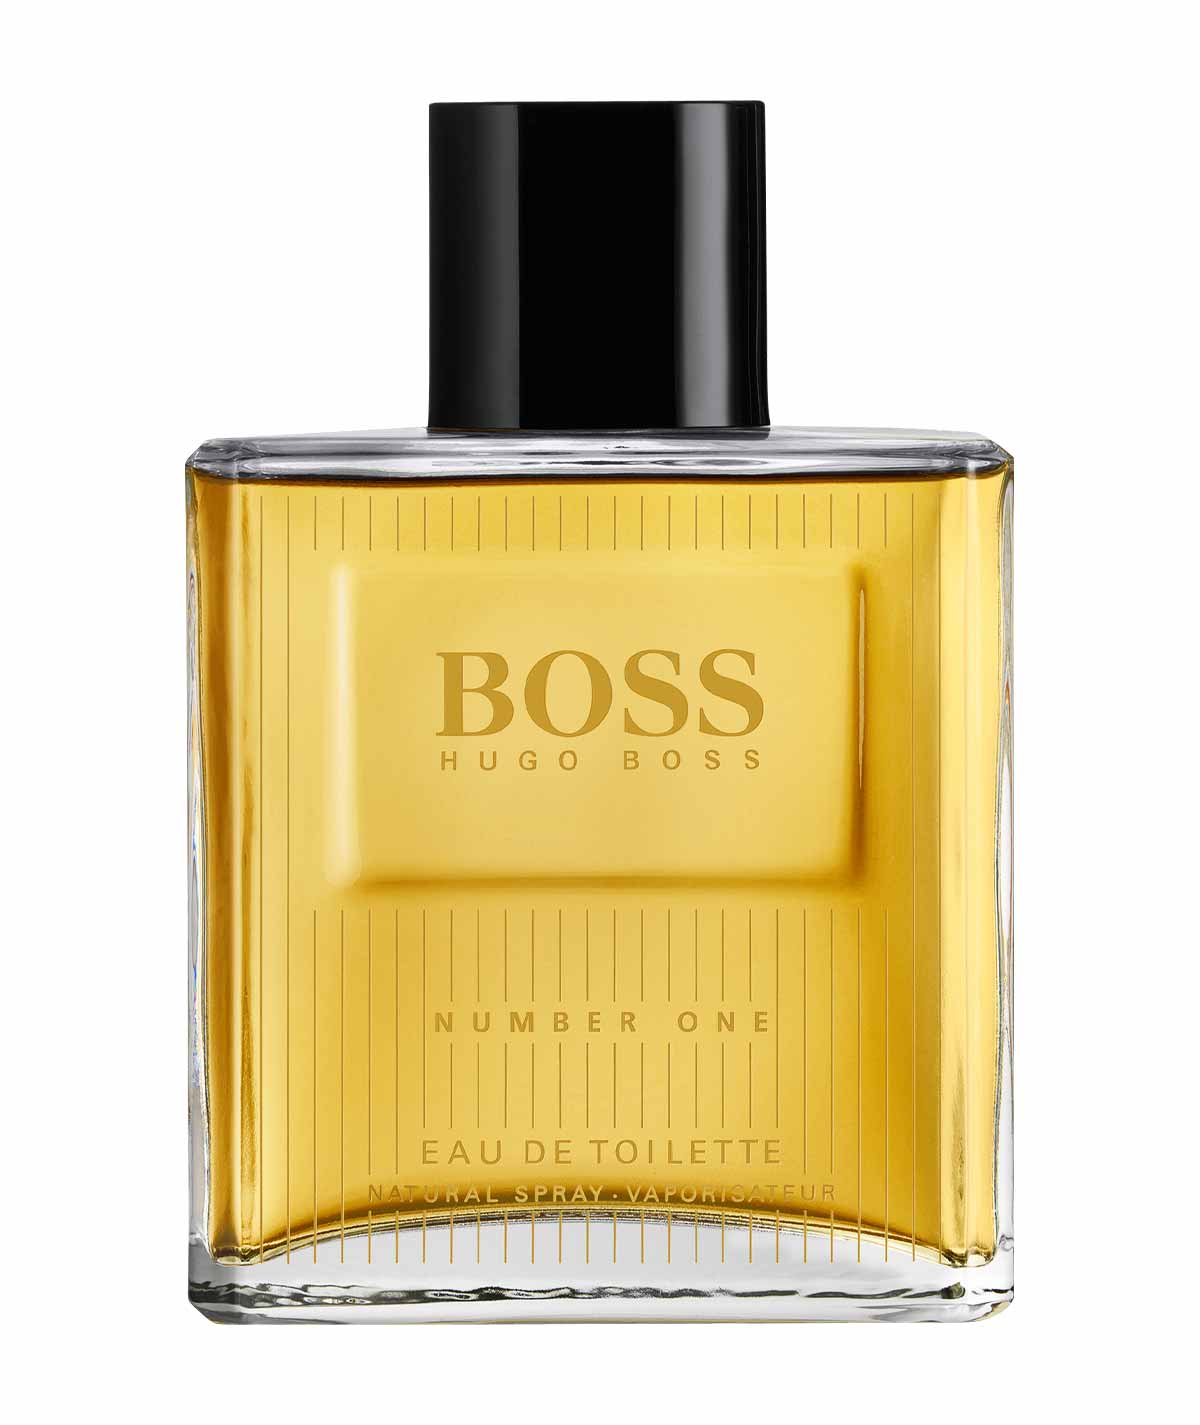 Best Hugo Boss Colognes in 2023 - FragranceReview.com